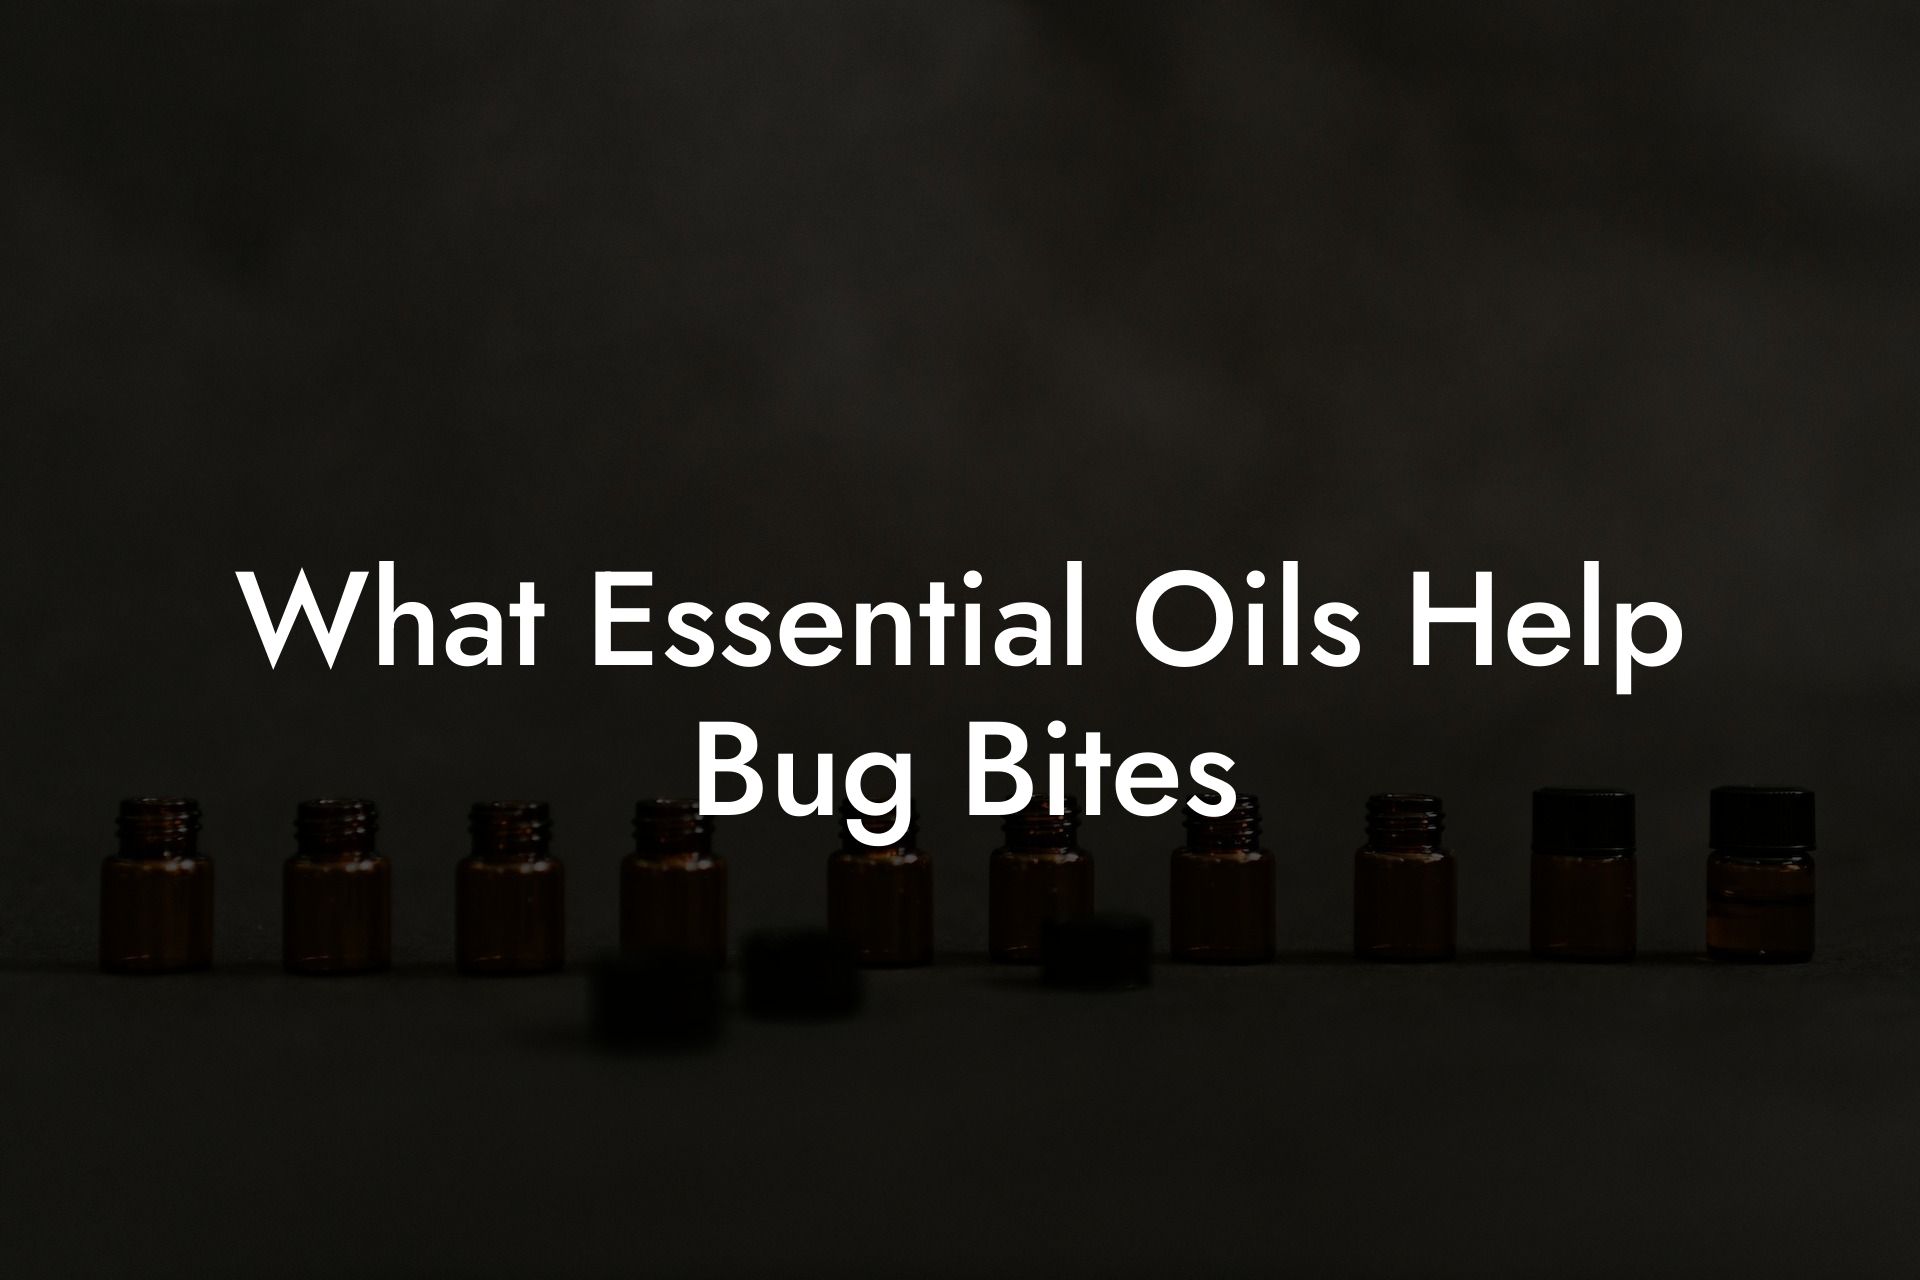 What Essential Oils Help Bug Bites